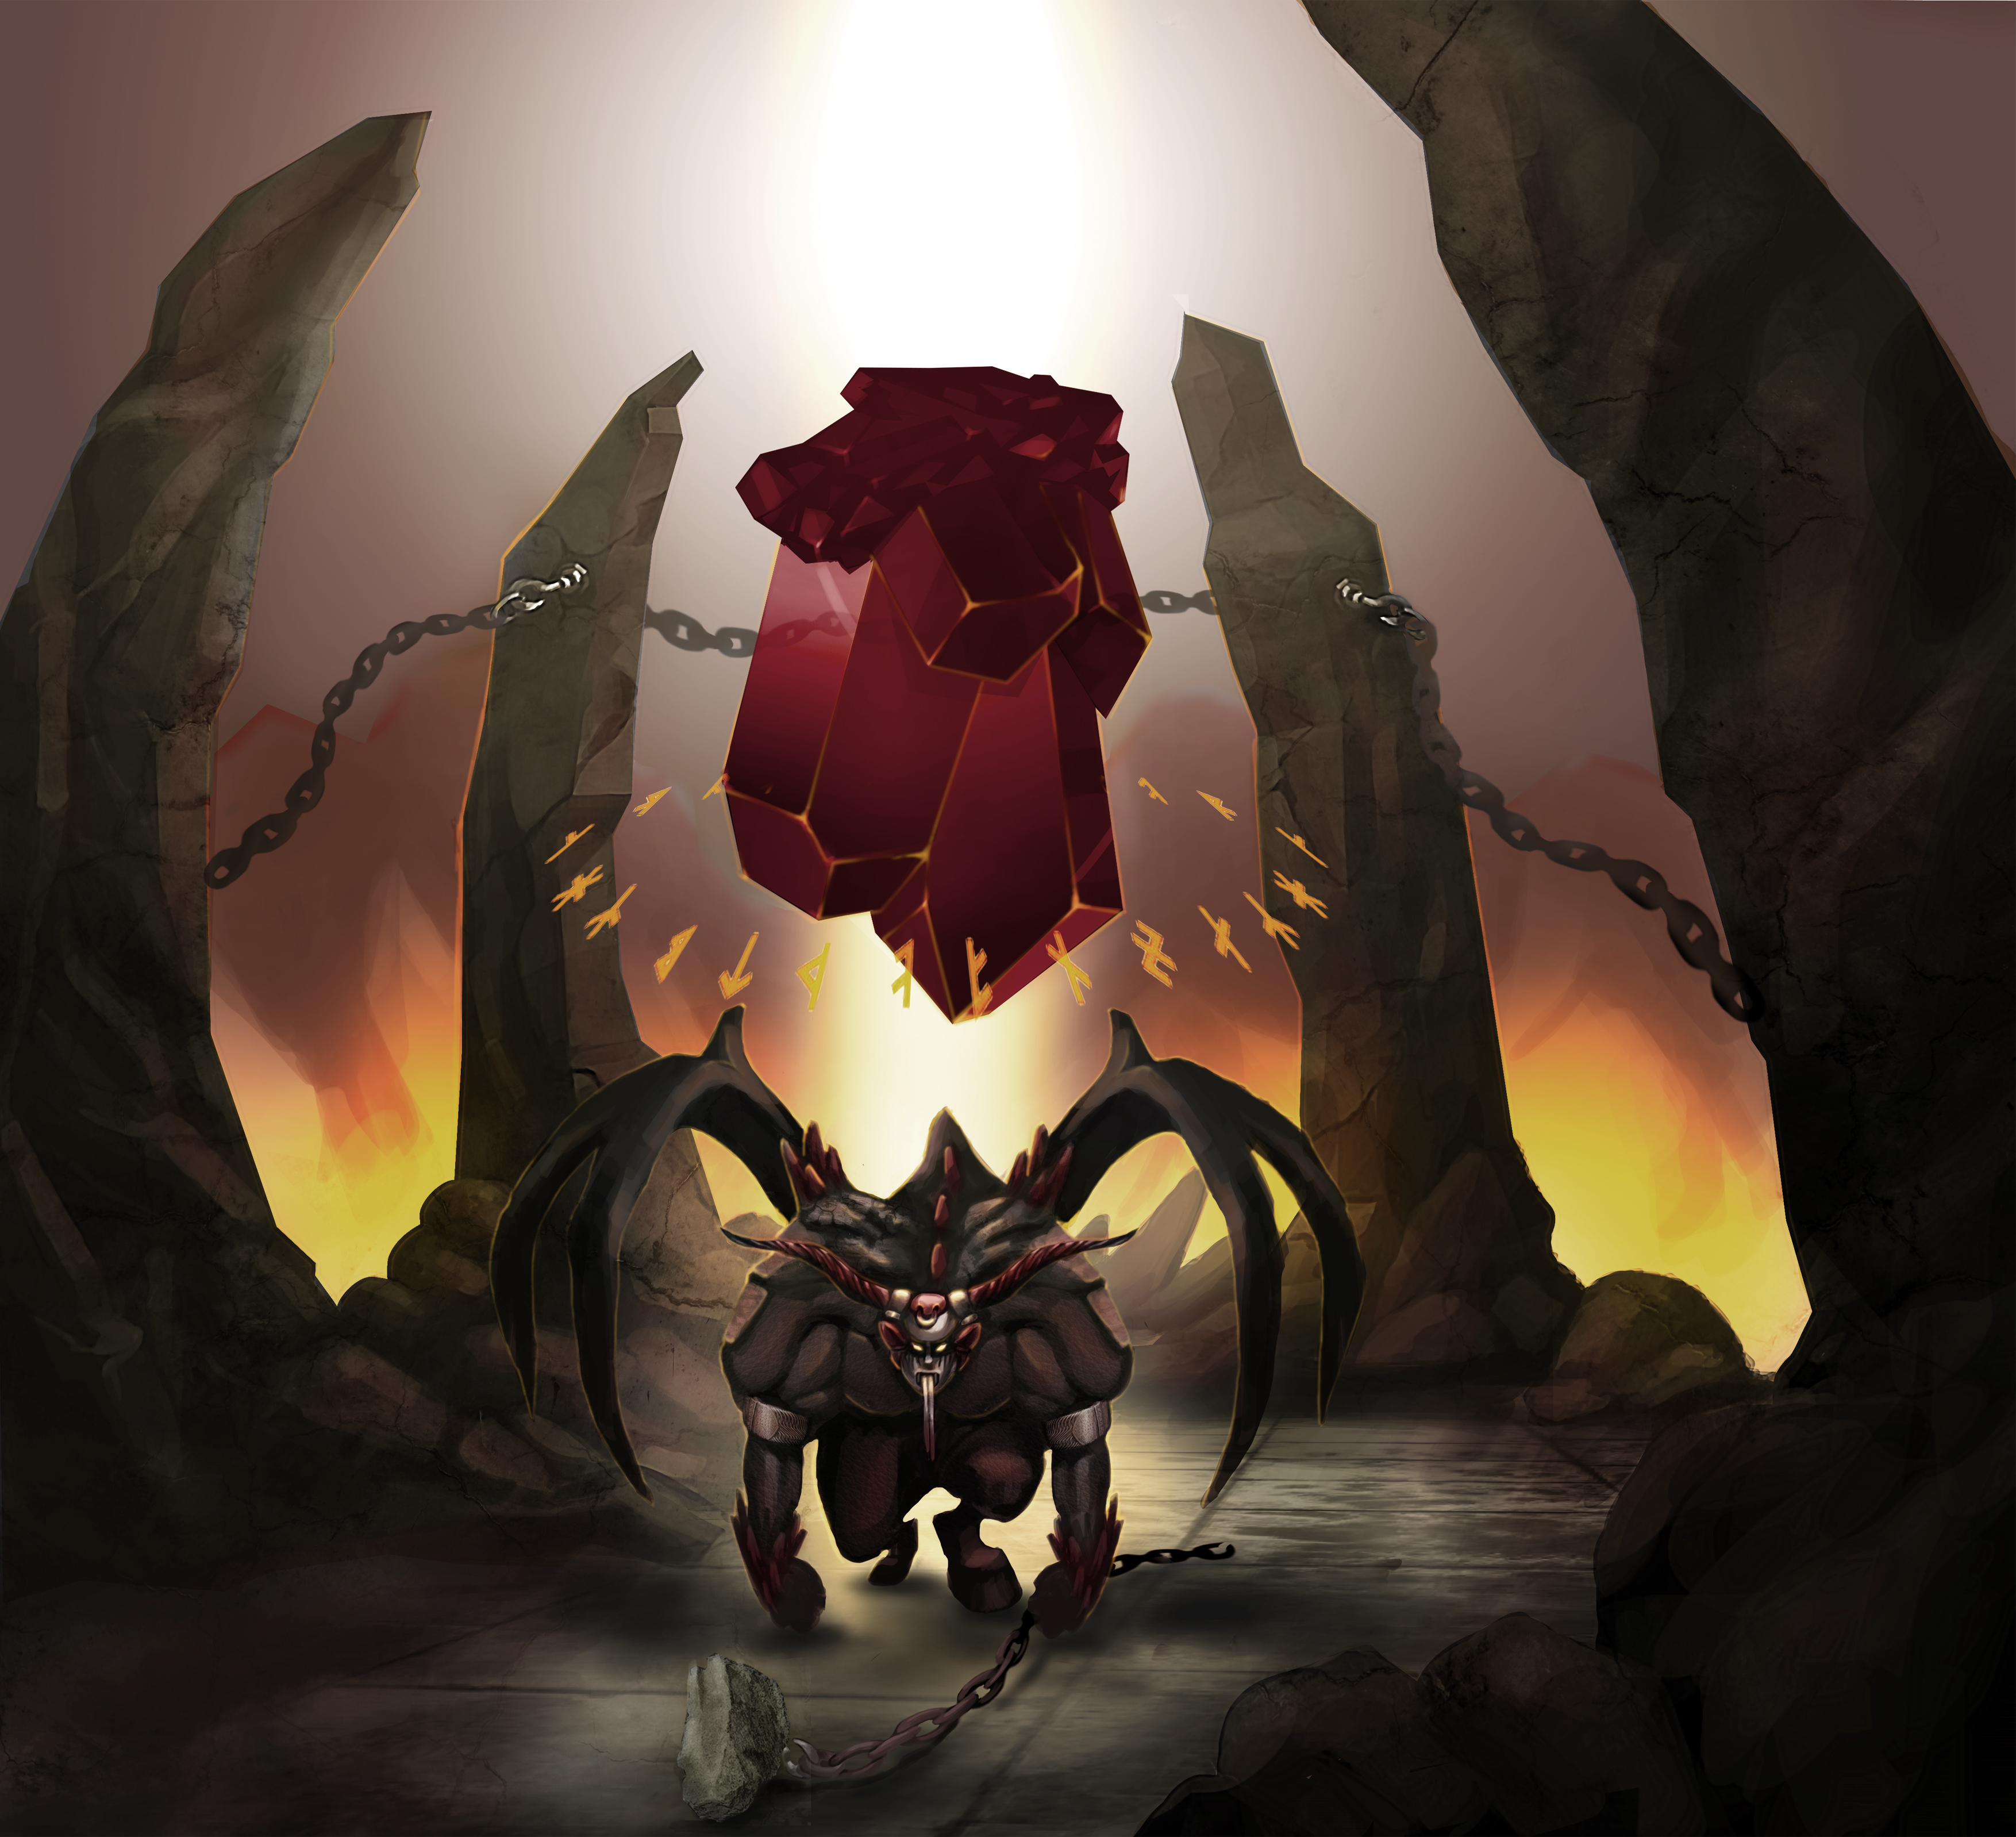 Demon with magic christal concept art illustration